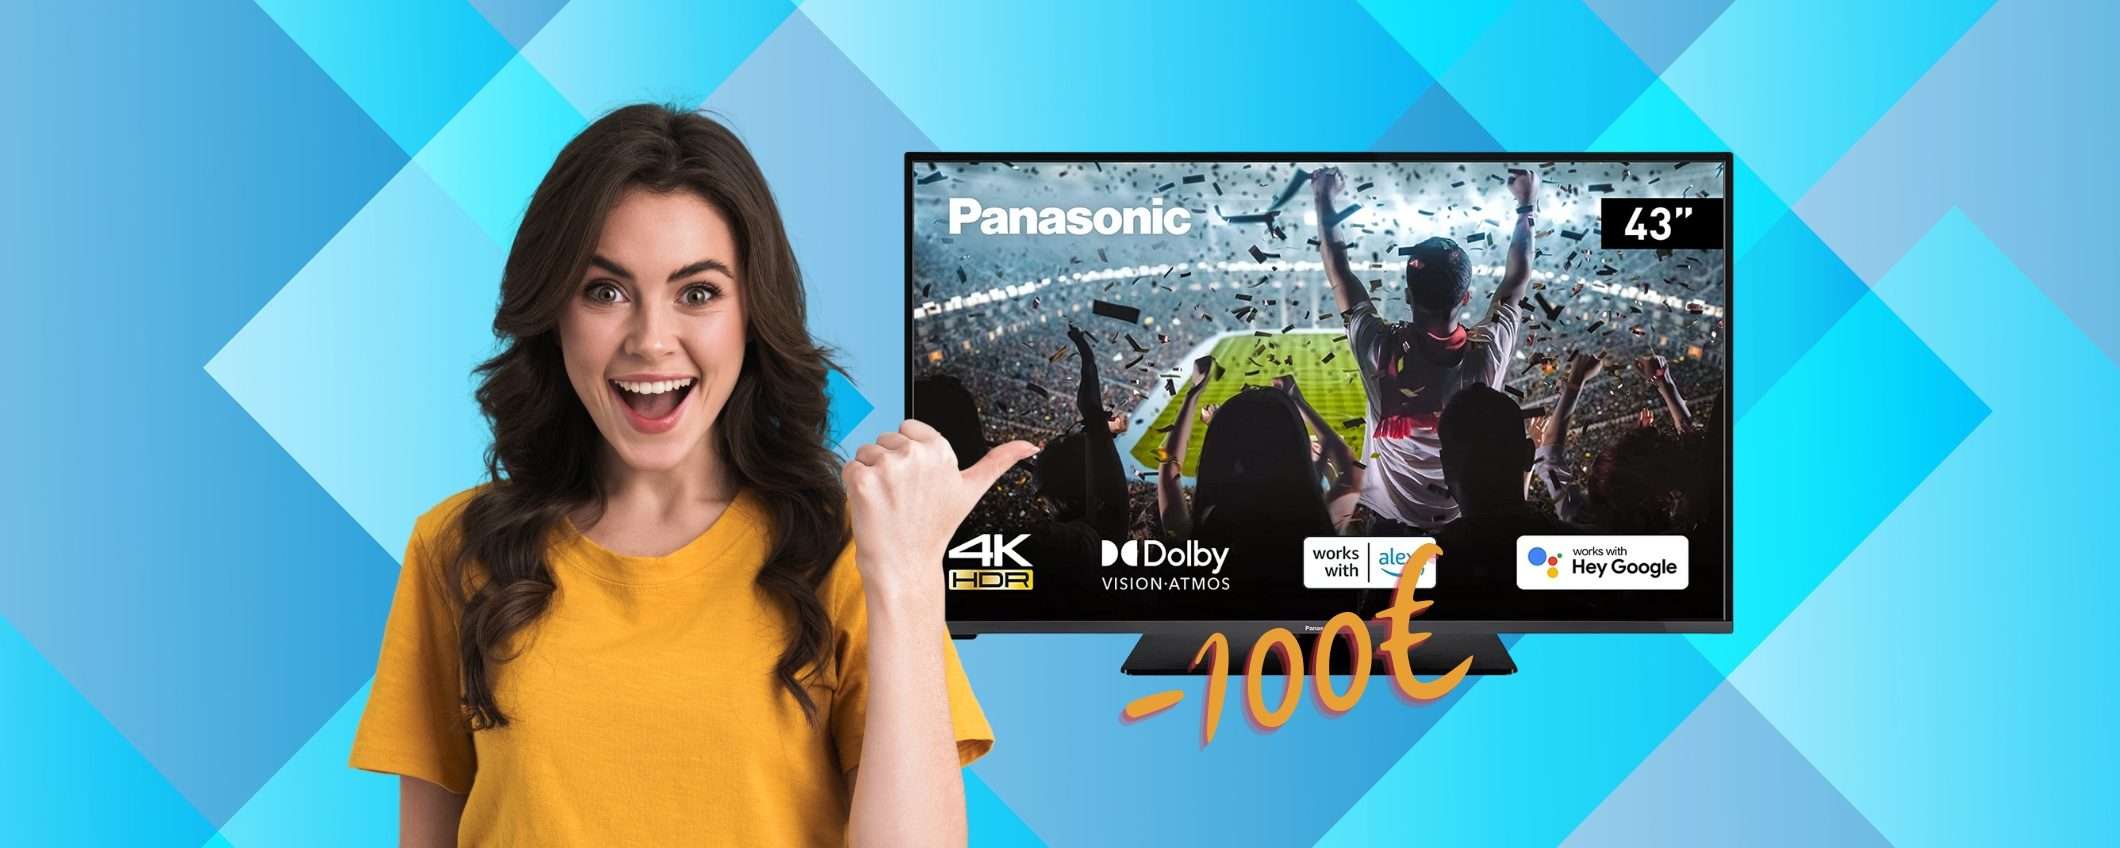 Panasonic LX-600: Smart TV da 43 pollici 4K LED a 100€ in MENO